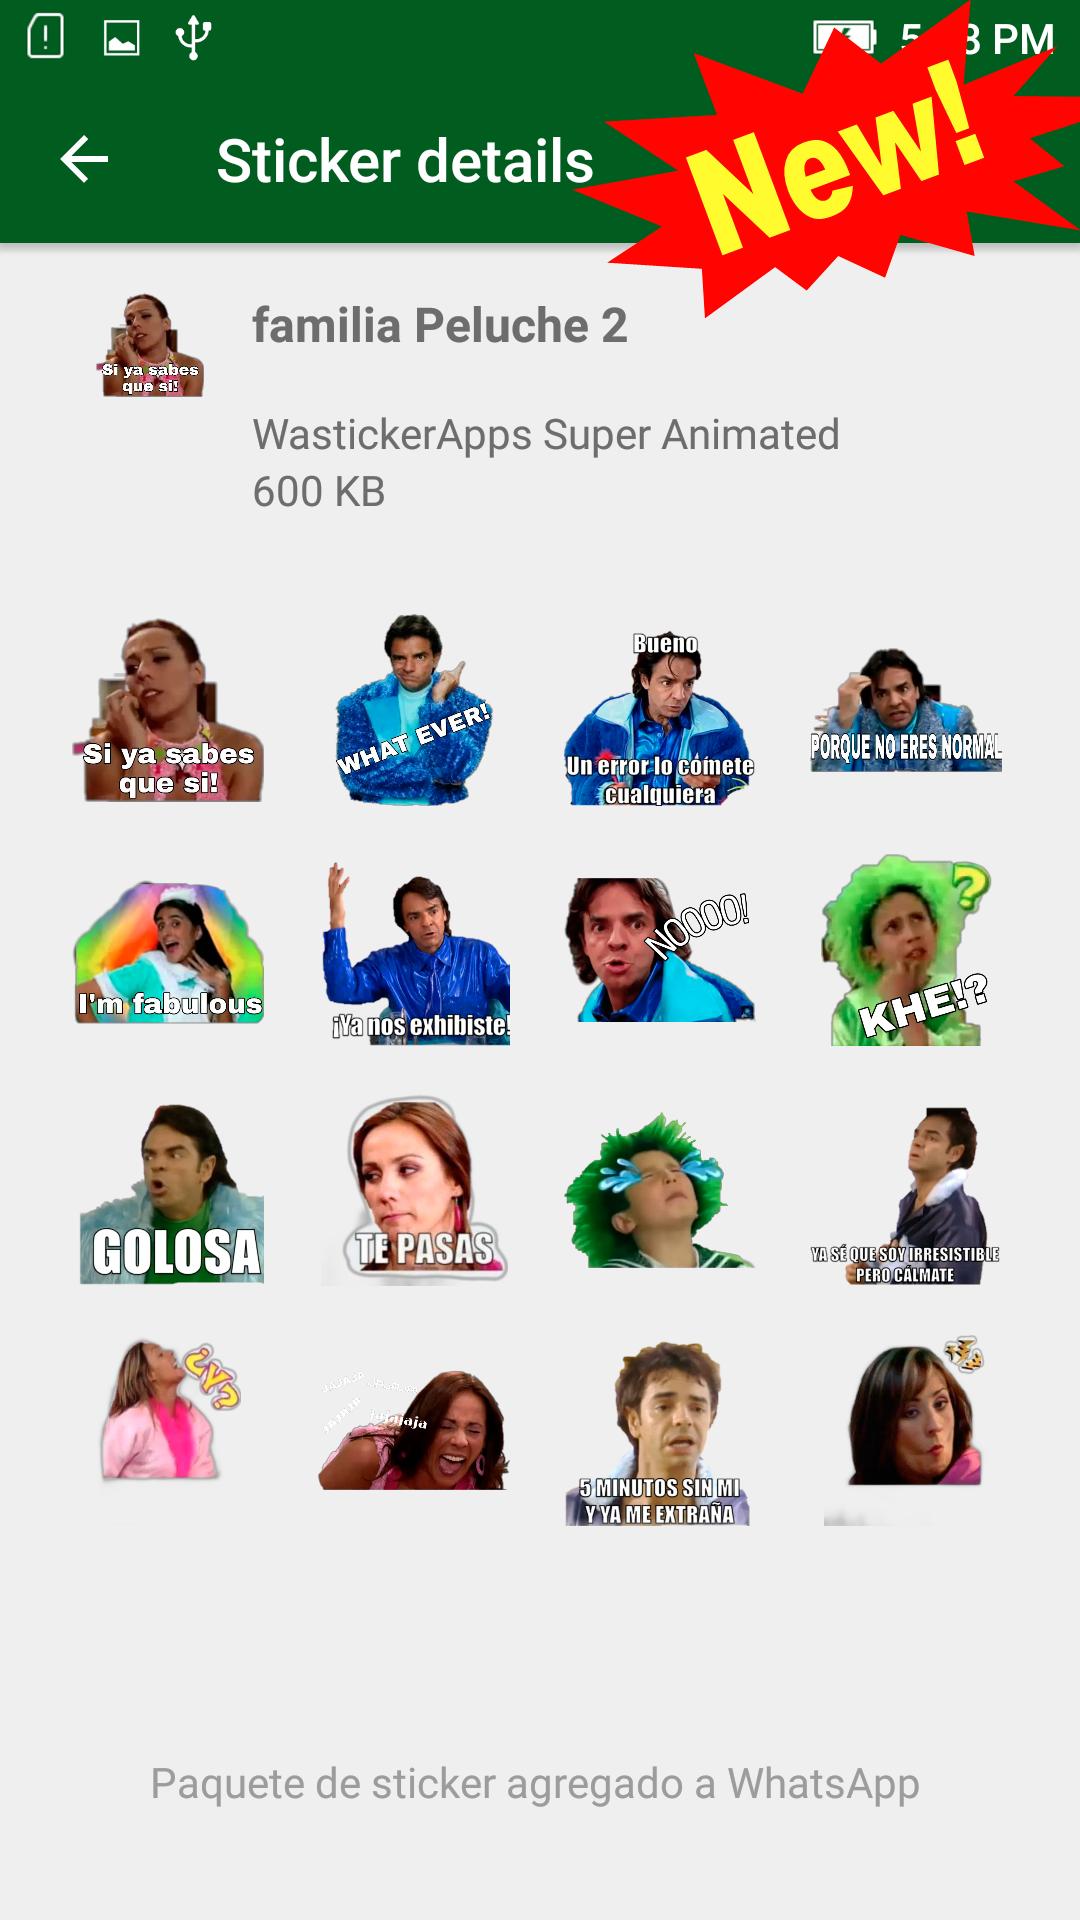 Xd83cxddf2xd83cxddfd Nuevos Stickers Graciosos Memes Mexico 2020 For Android Apk